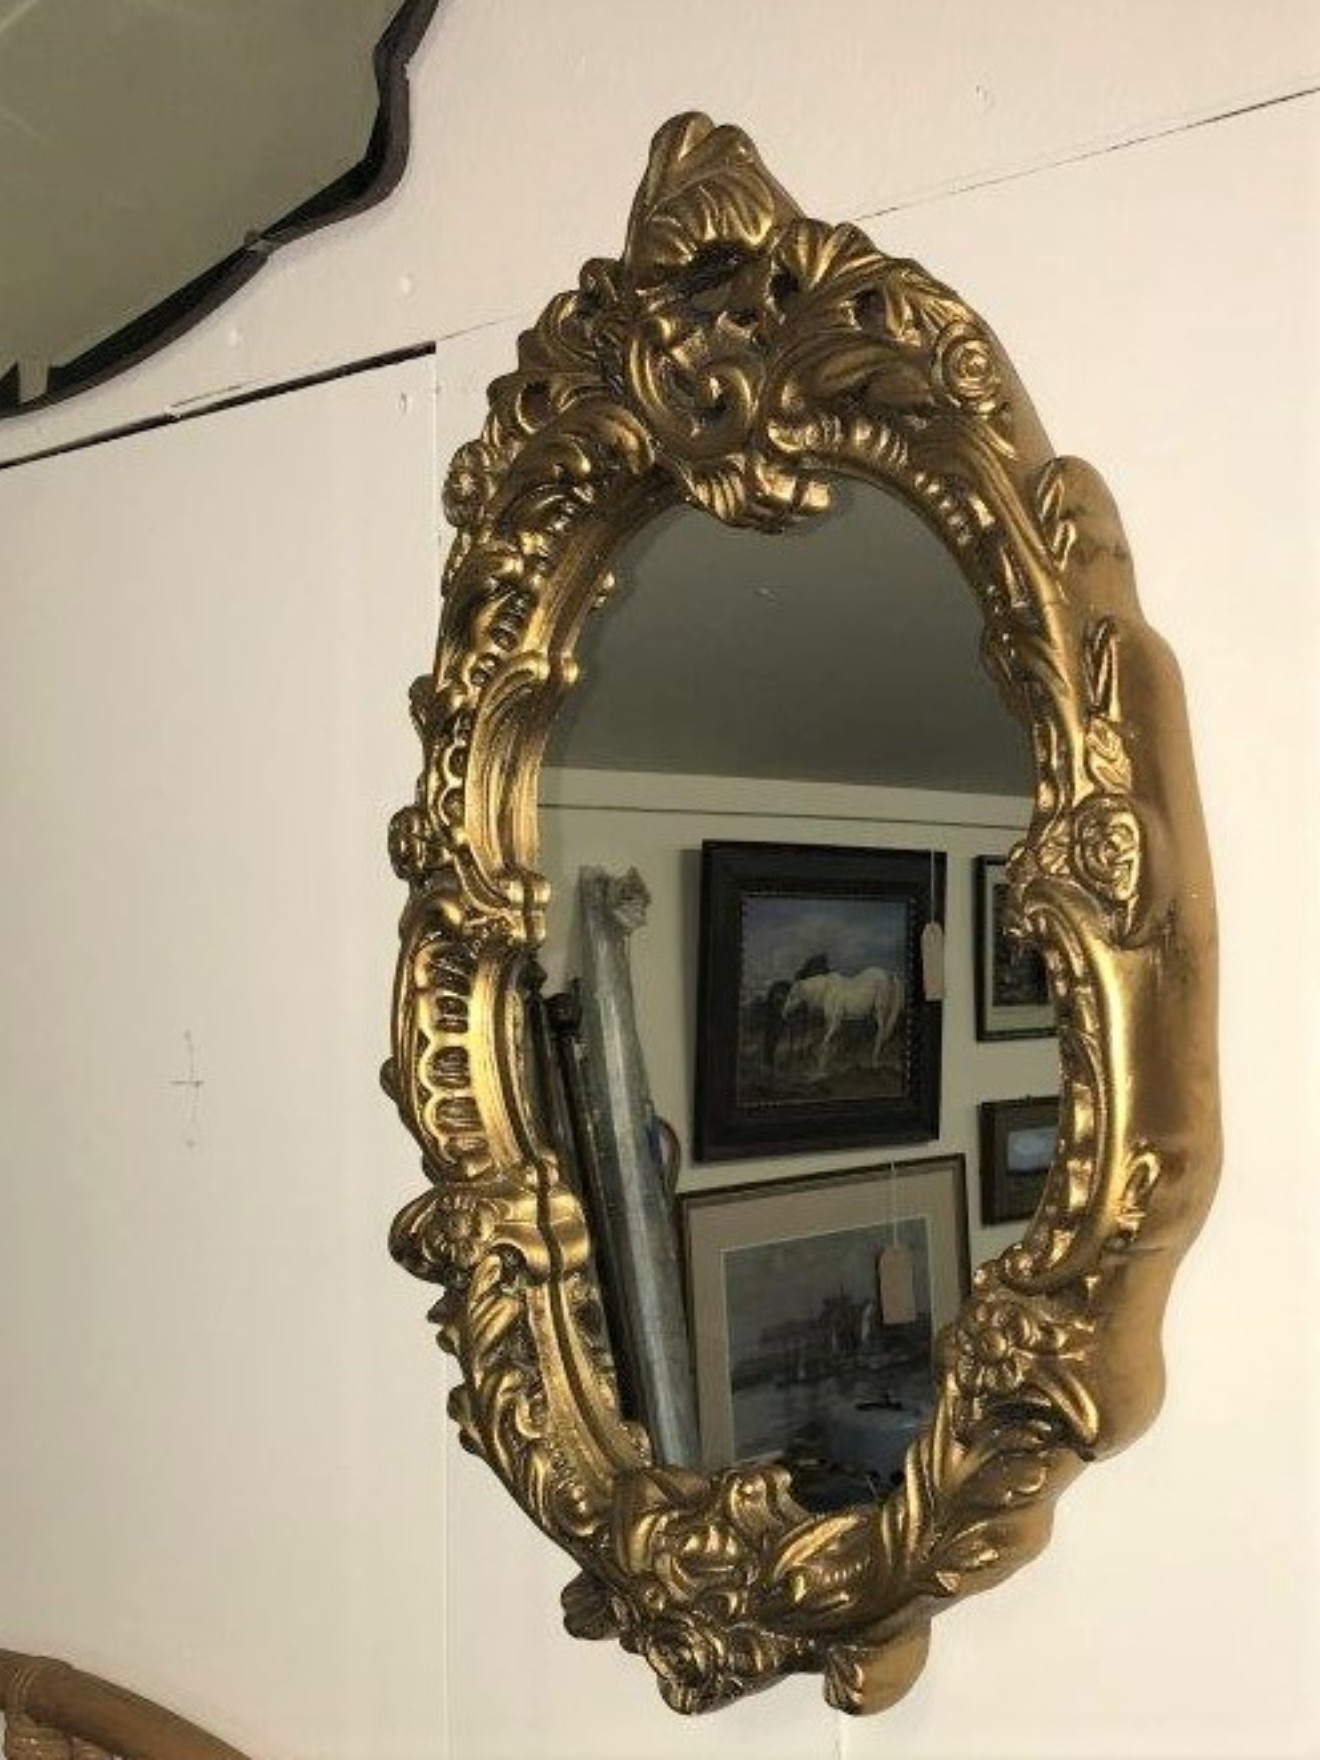 Vintage Gilt Frame Wall Mirror